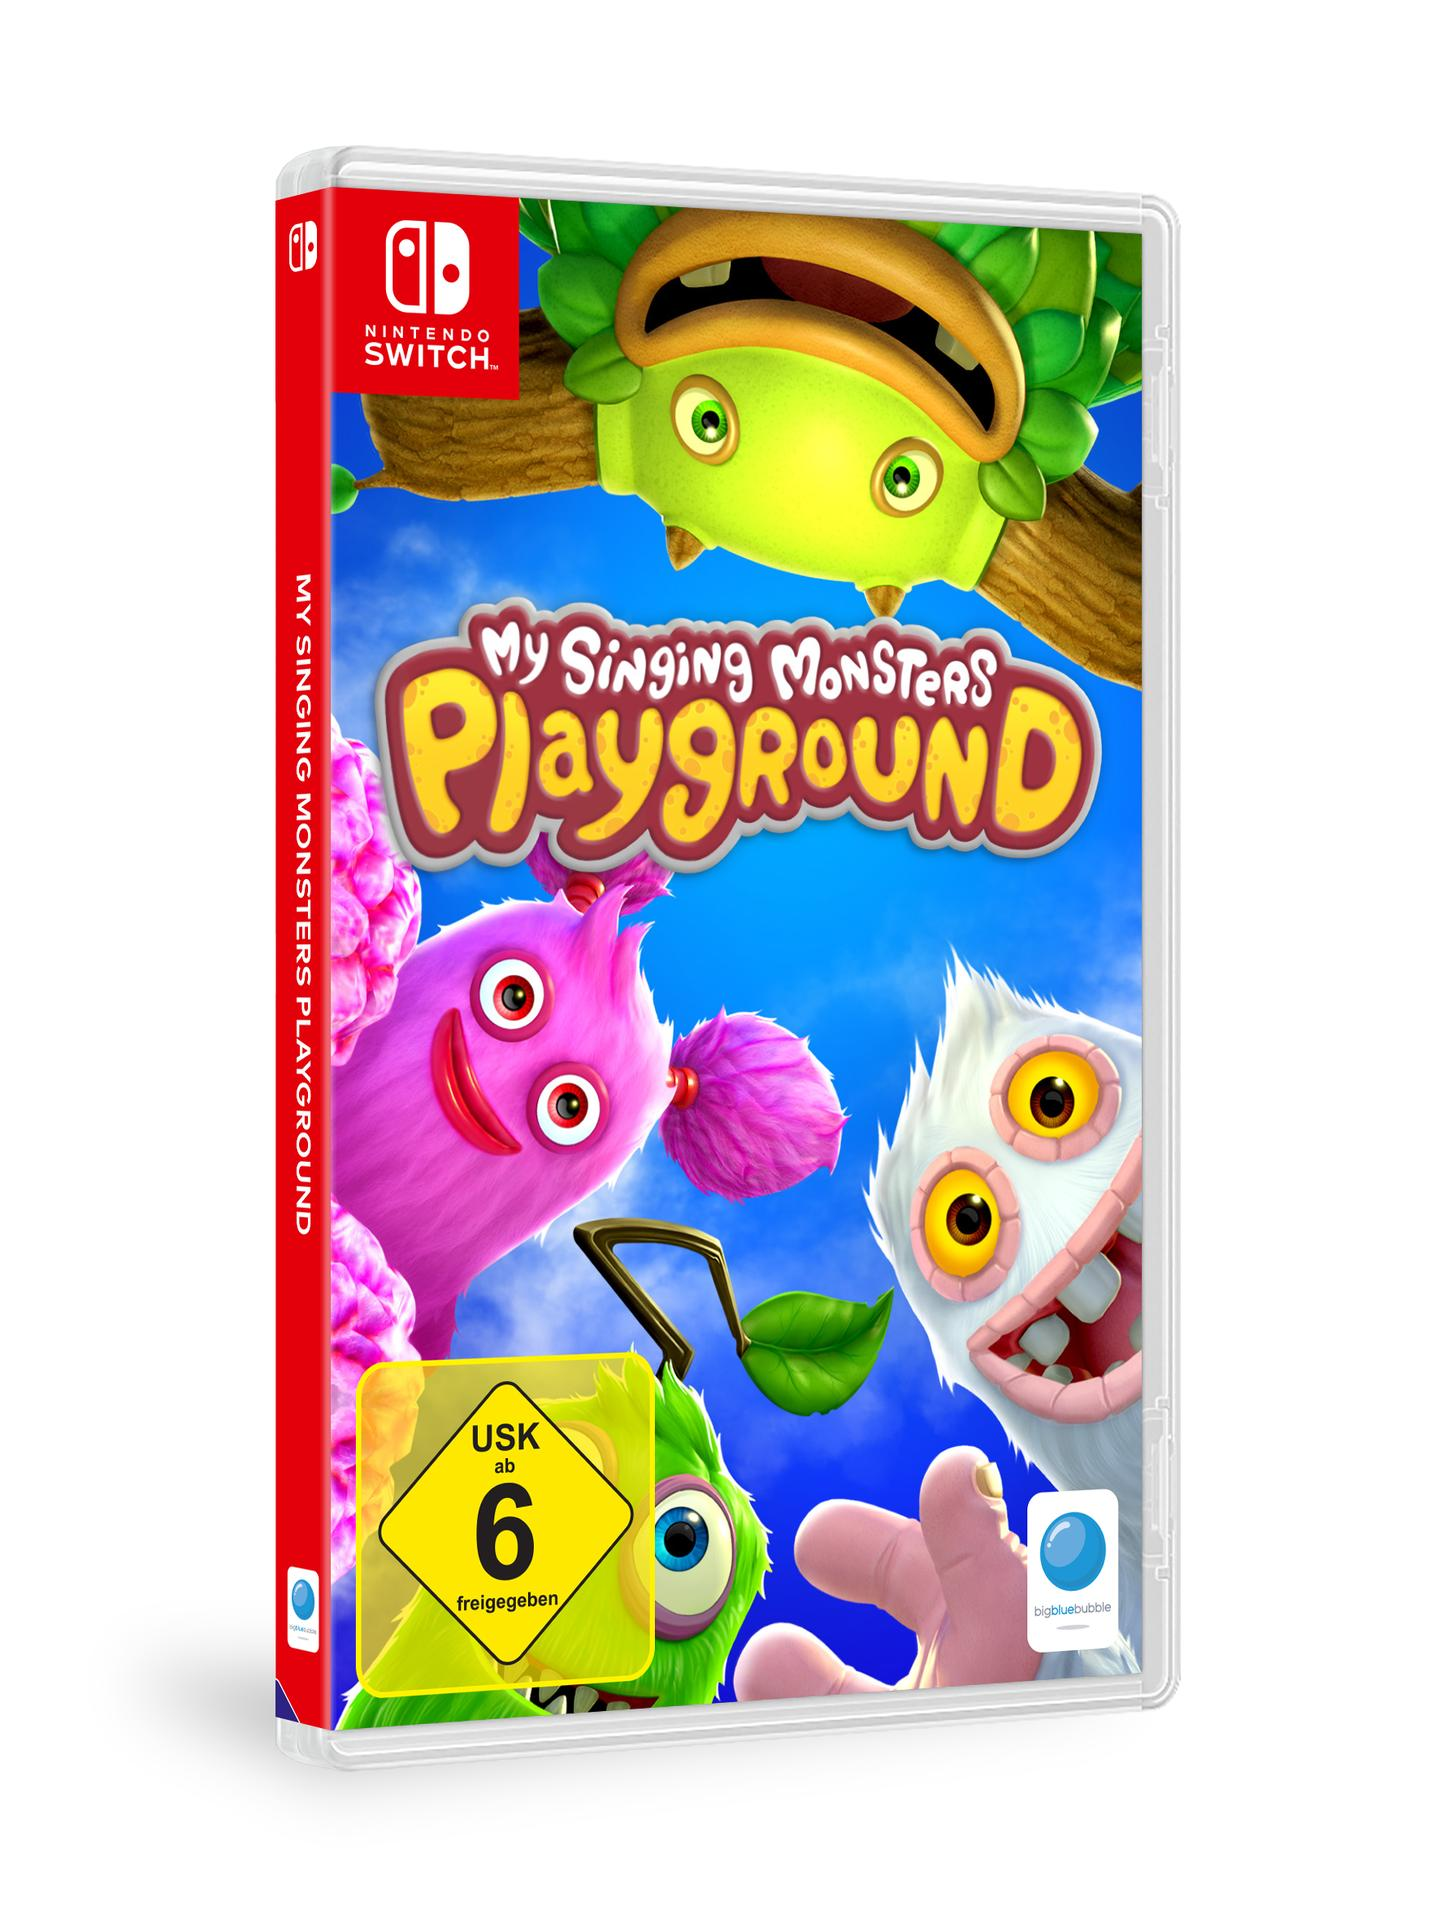 My Singing Monsters: Playground [Nintendo Switch] 